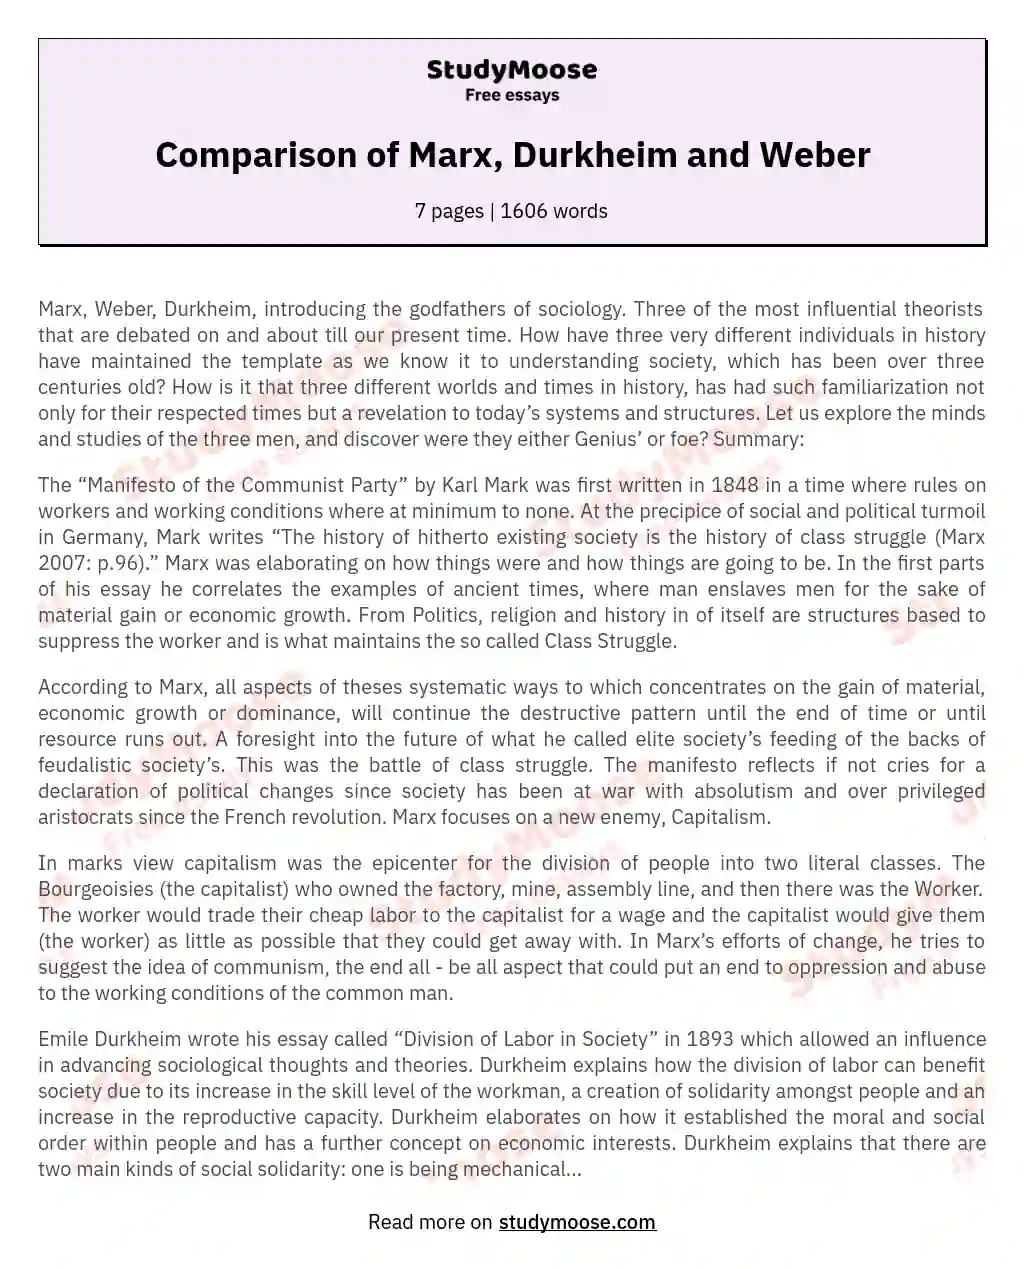 Comparison of Marx, Durkheim and Weber essay